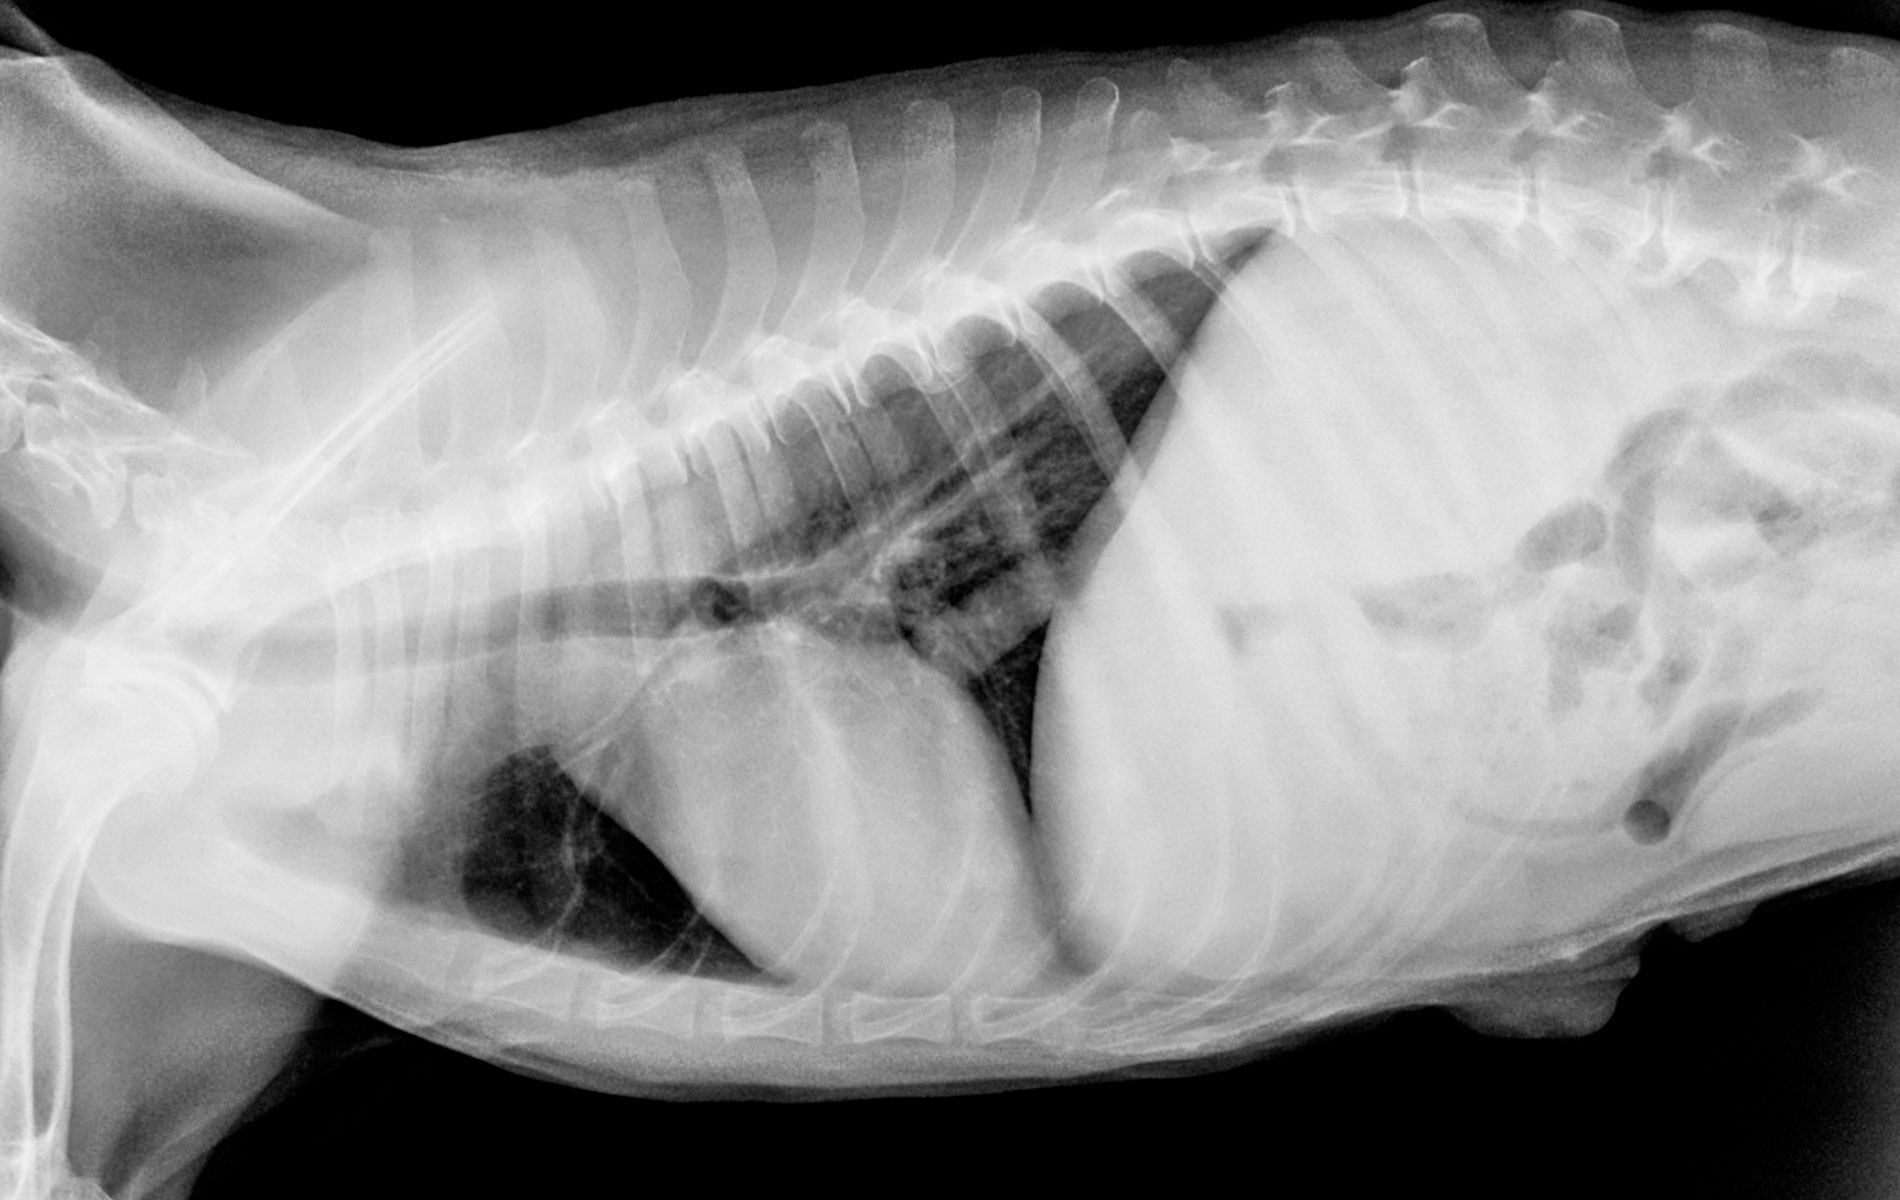 X-ray of an animal